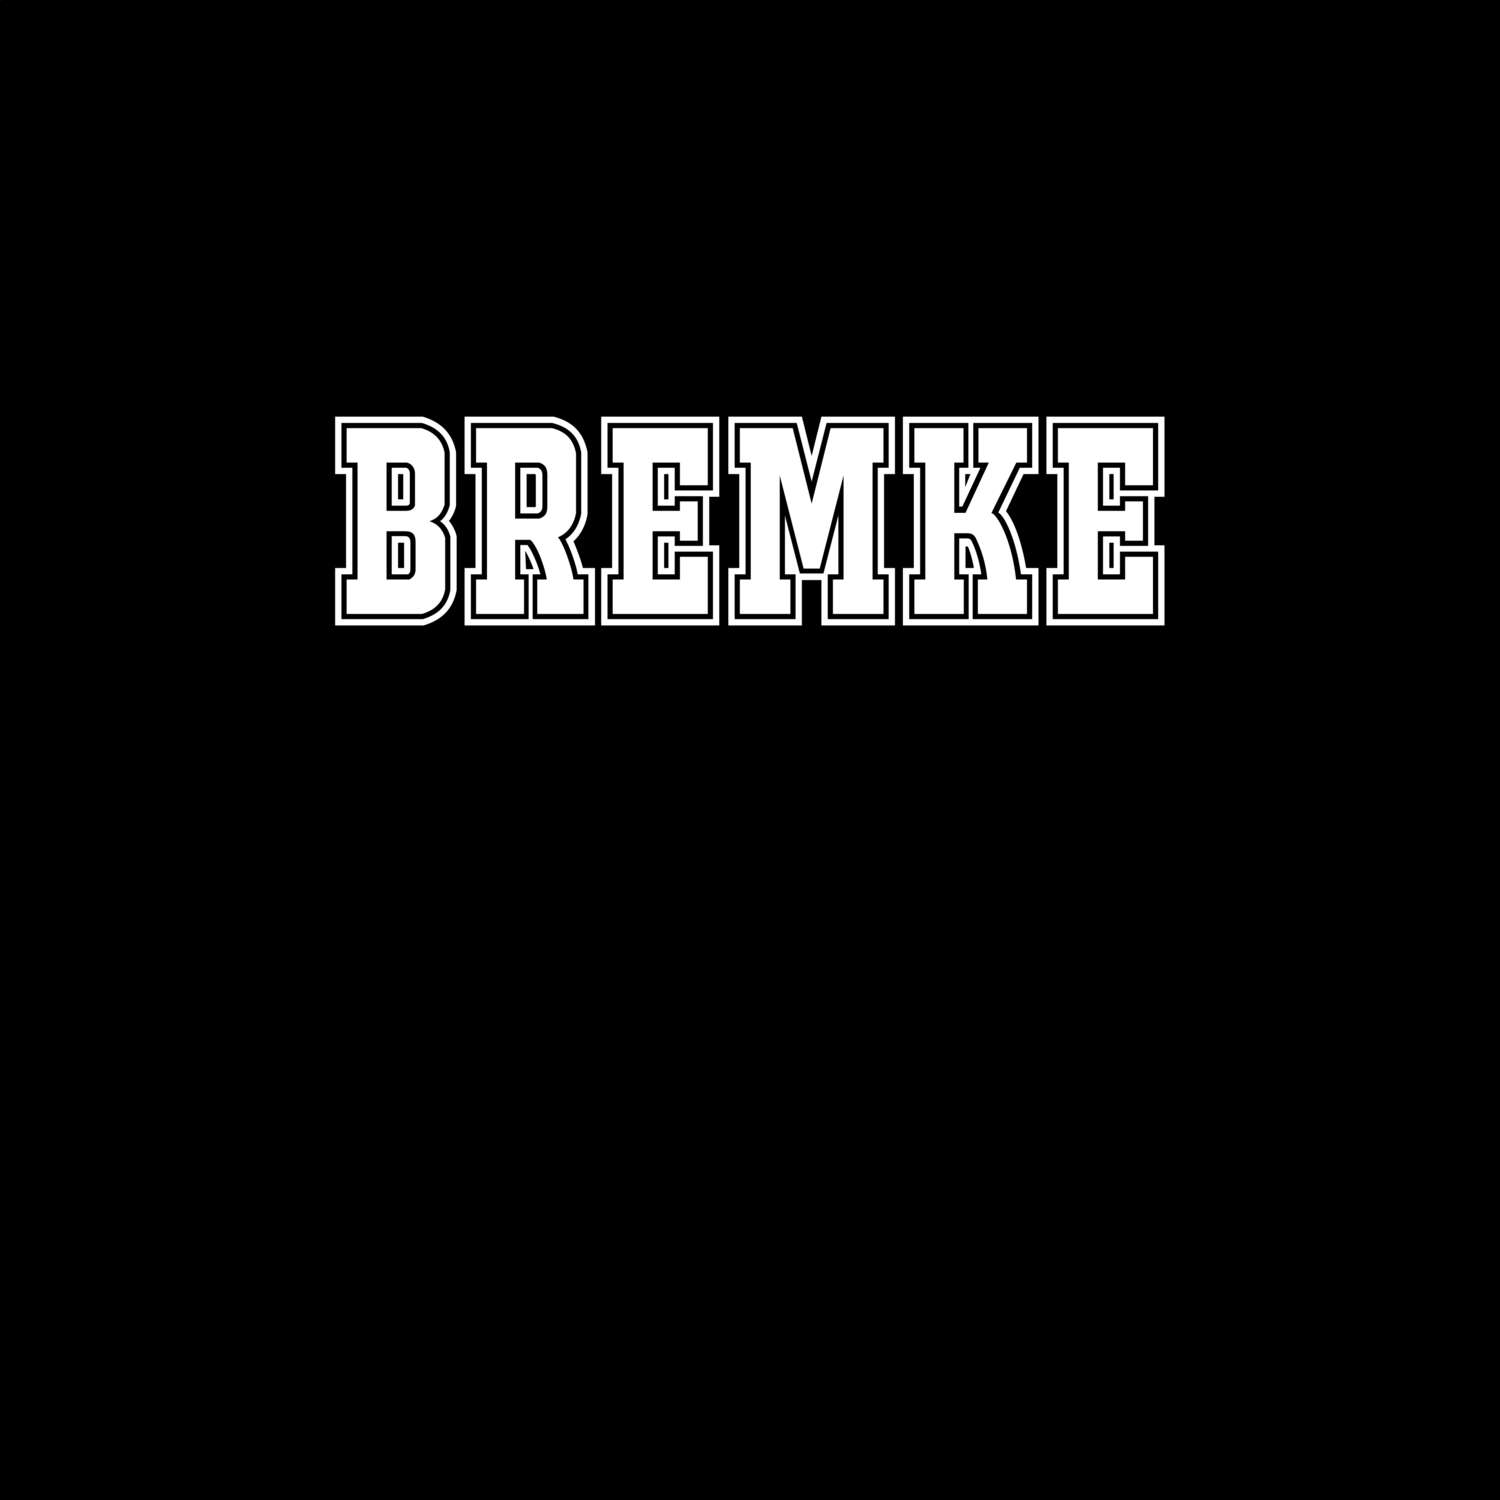 Bremke T-Shirt »Classic«